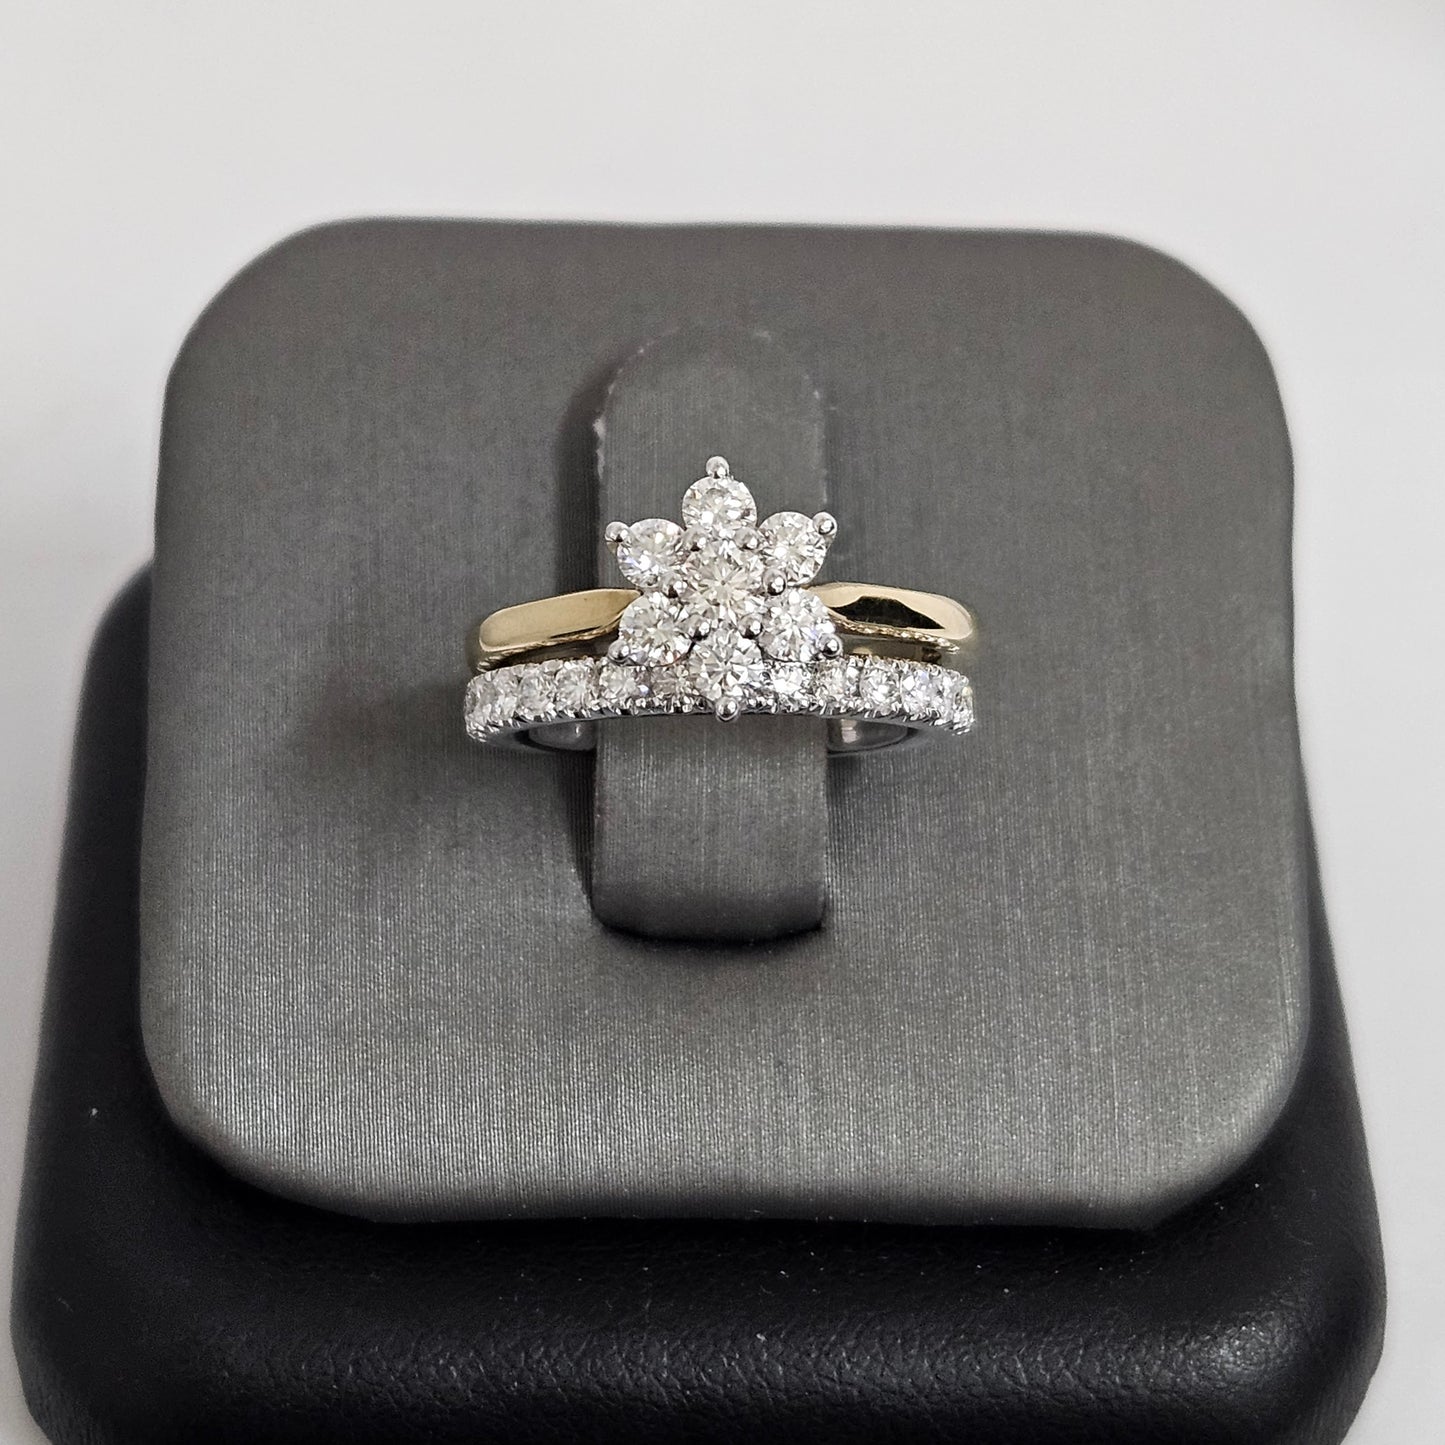 Flower engagement Diamond Ring / Natural Diamond Anniversary Ring/ flower ring/ Unique Engagement Ring / Anniversary Ring / Girt for her